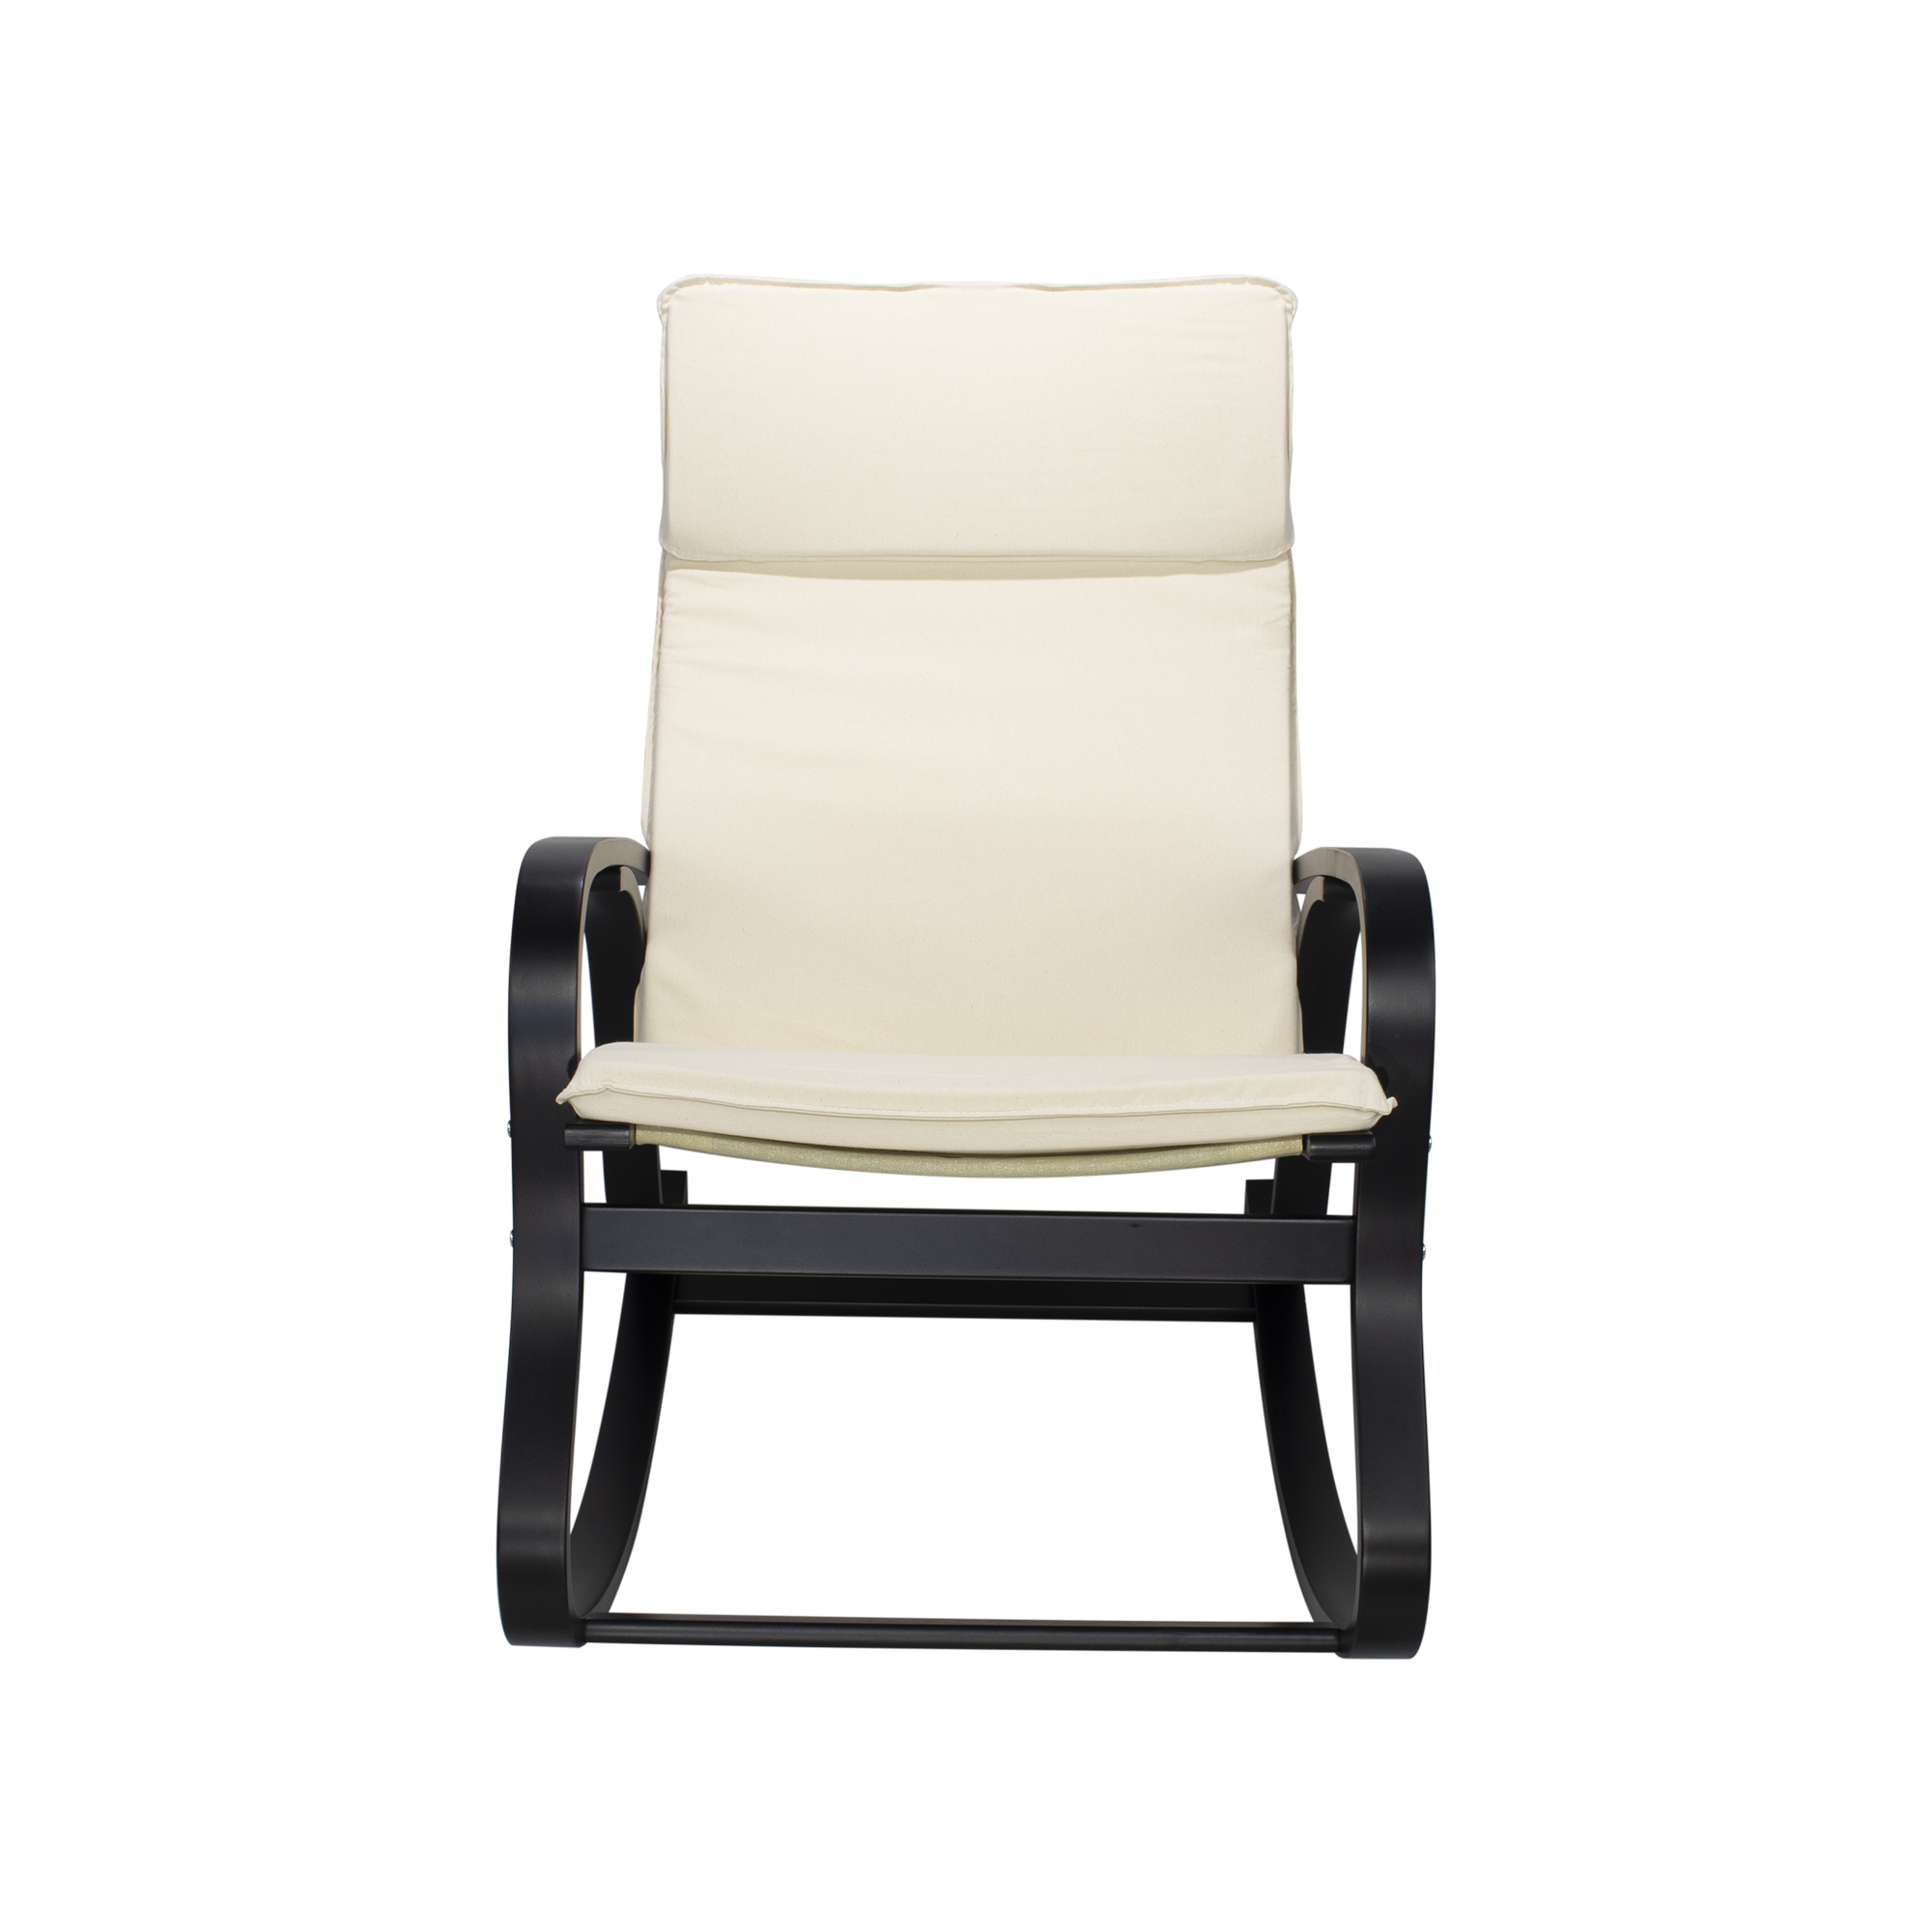 Relaxstuhl Schwingstuhl ohne Fussteil - Farbe: Naturweiß D1